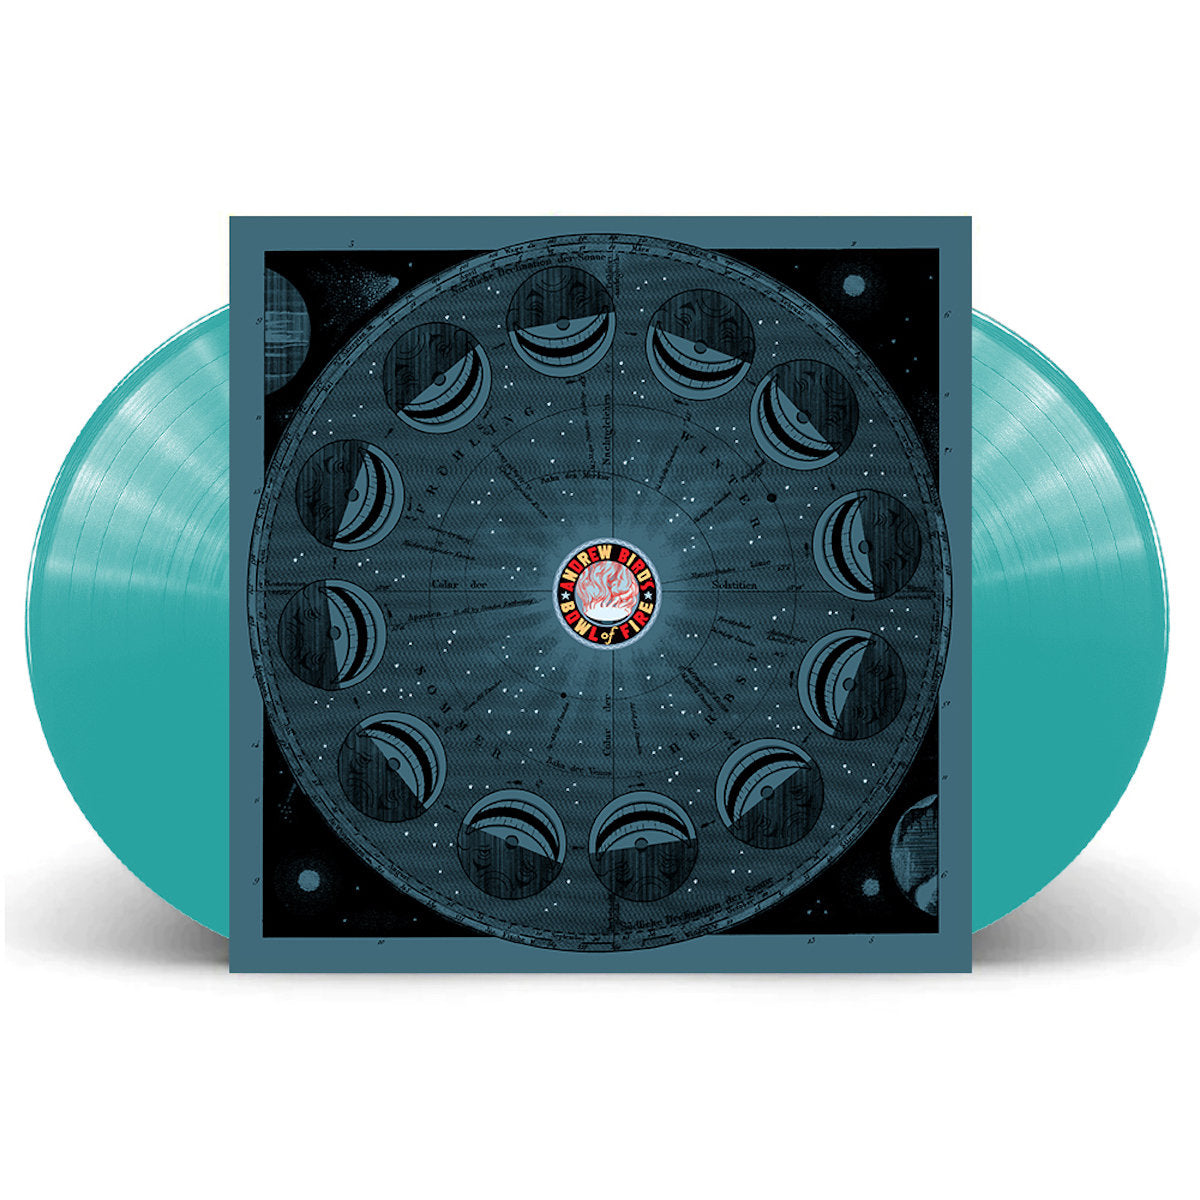 Andrew Bird's Bowl of Fire: Oh! The Grandeur Vinyl LP (Turquoise)